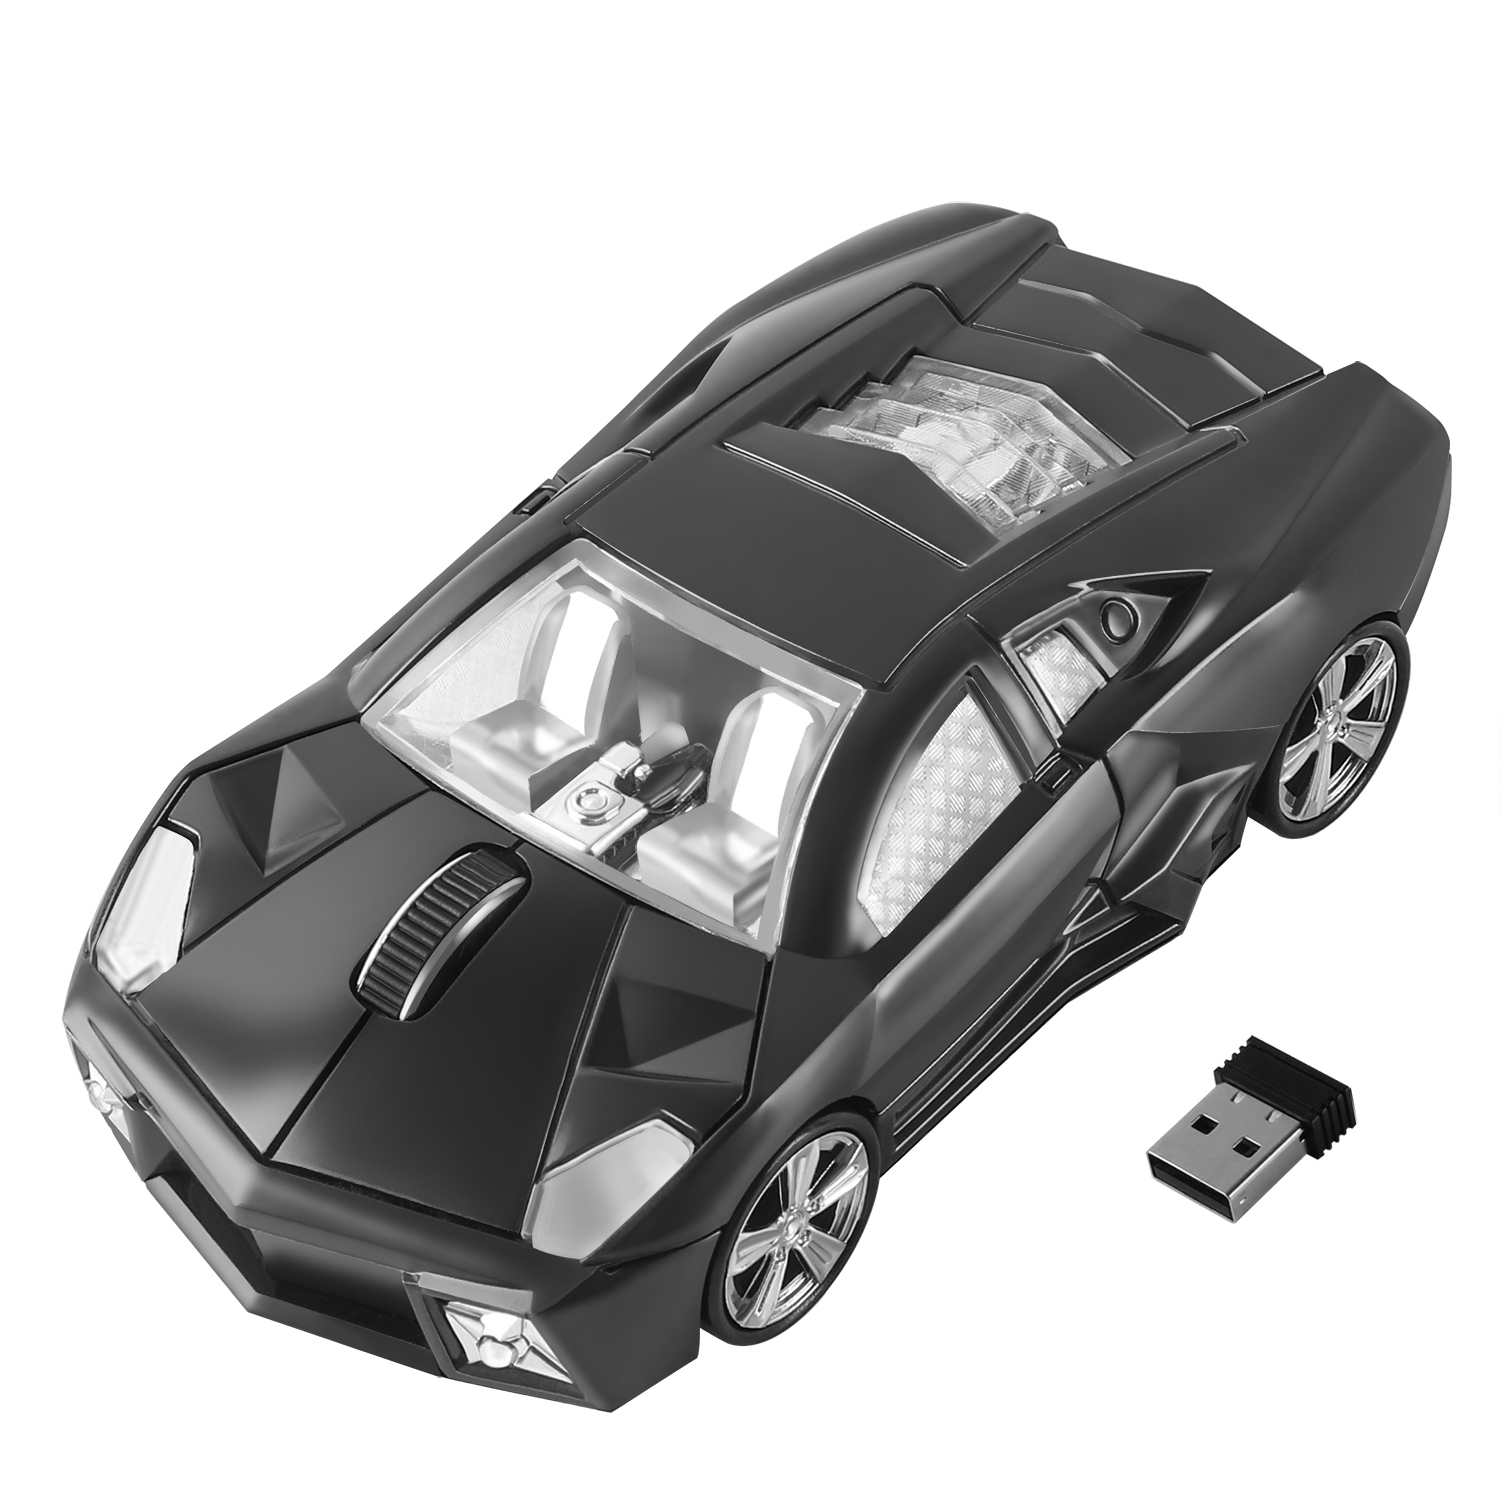 2-4G-Wireless-Mouse-Ergonomic-Sports-Car-Design-Gaming-Mause-1600-DPI-USB-Optical-Kids-Regalo (9)